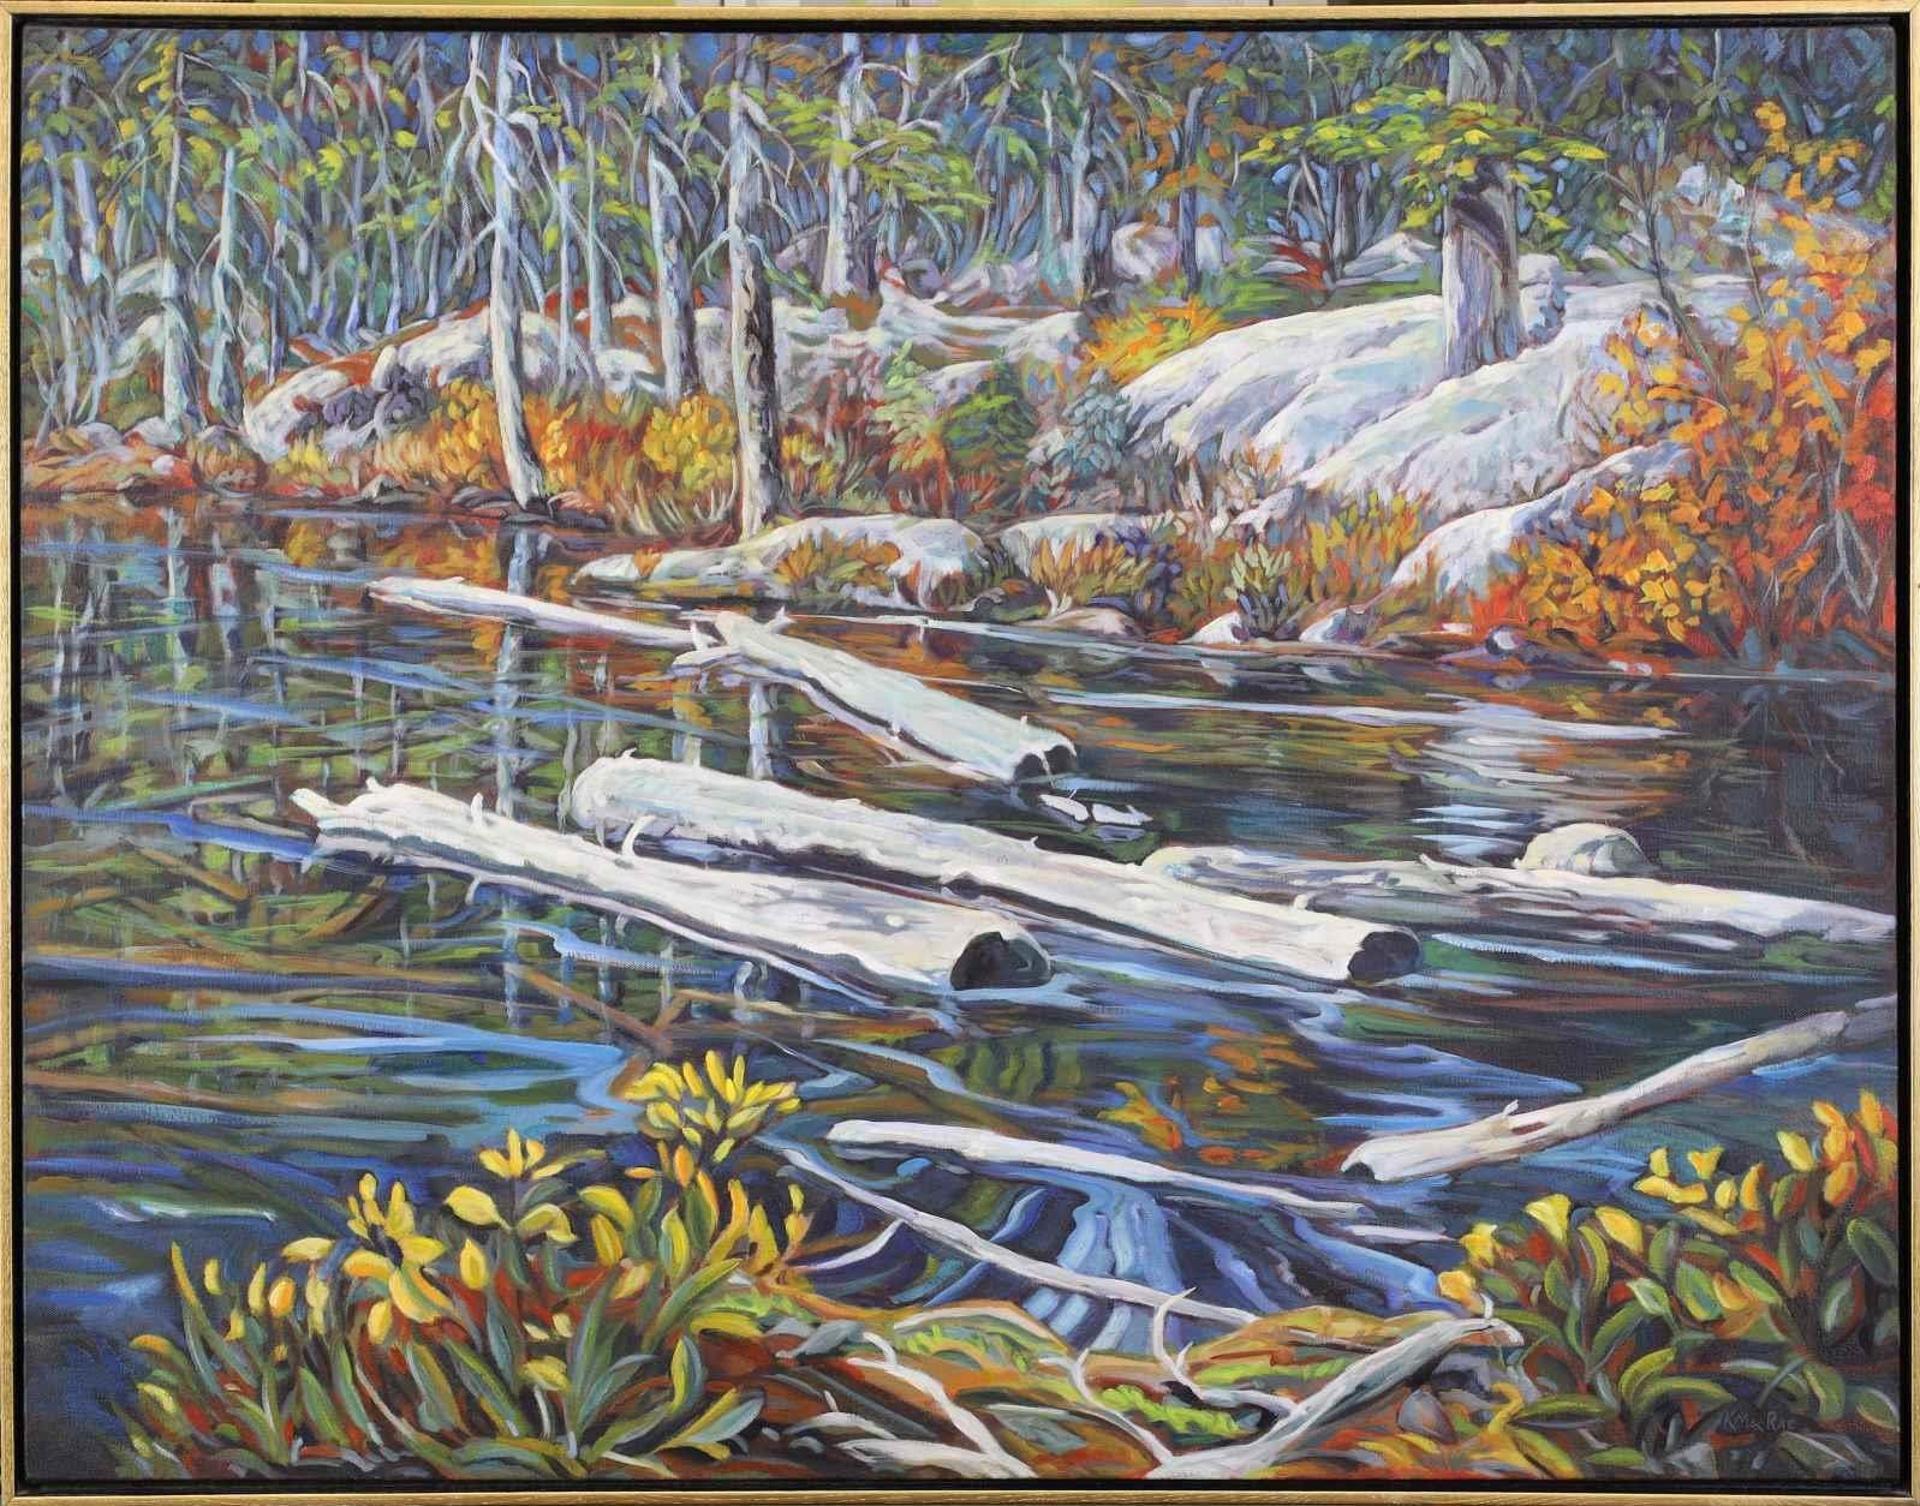 Karen Macrae - Floating Logs, Grassi Lake; 2005